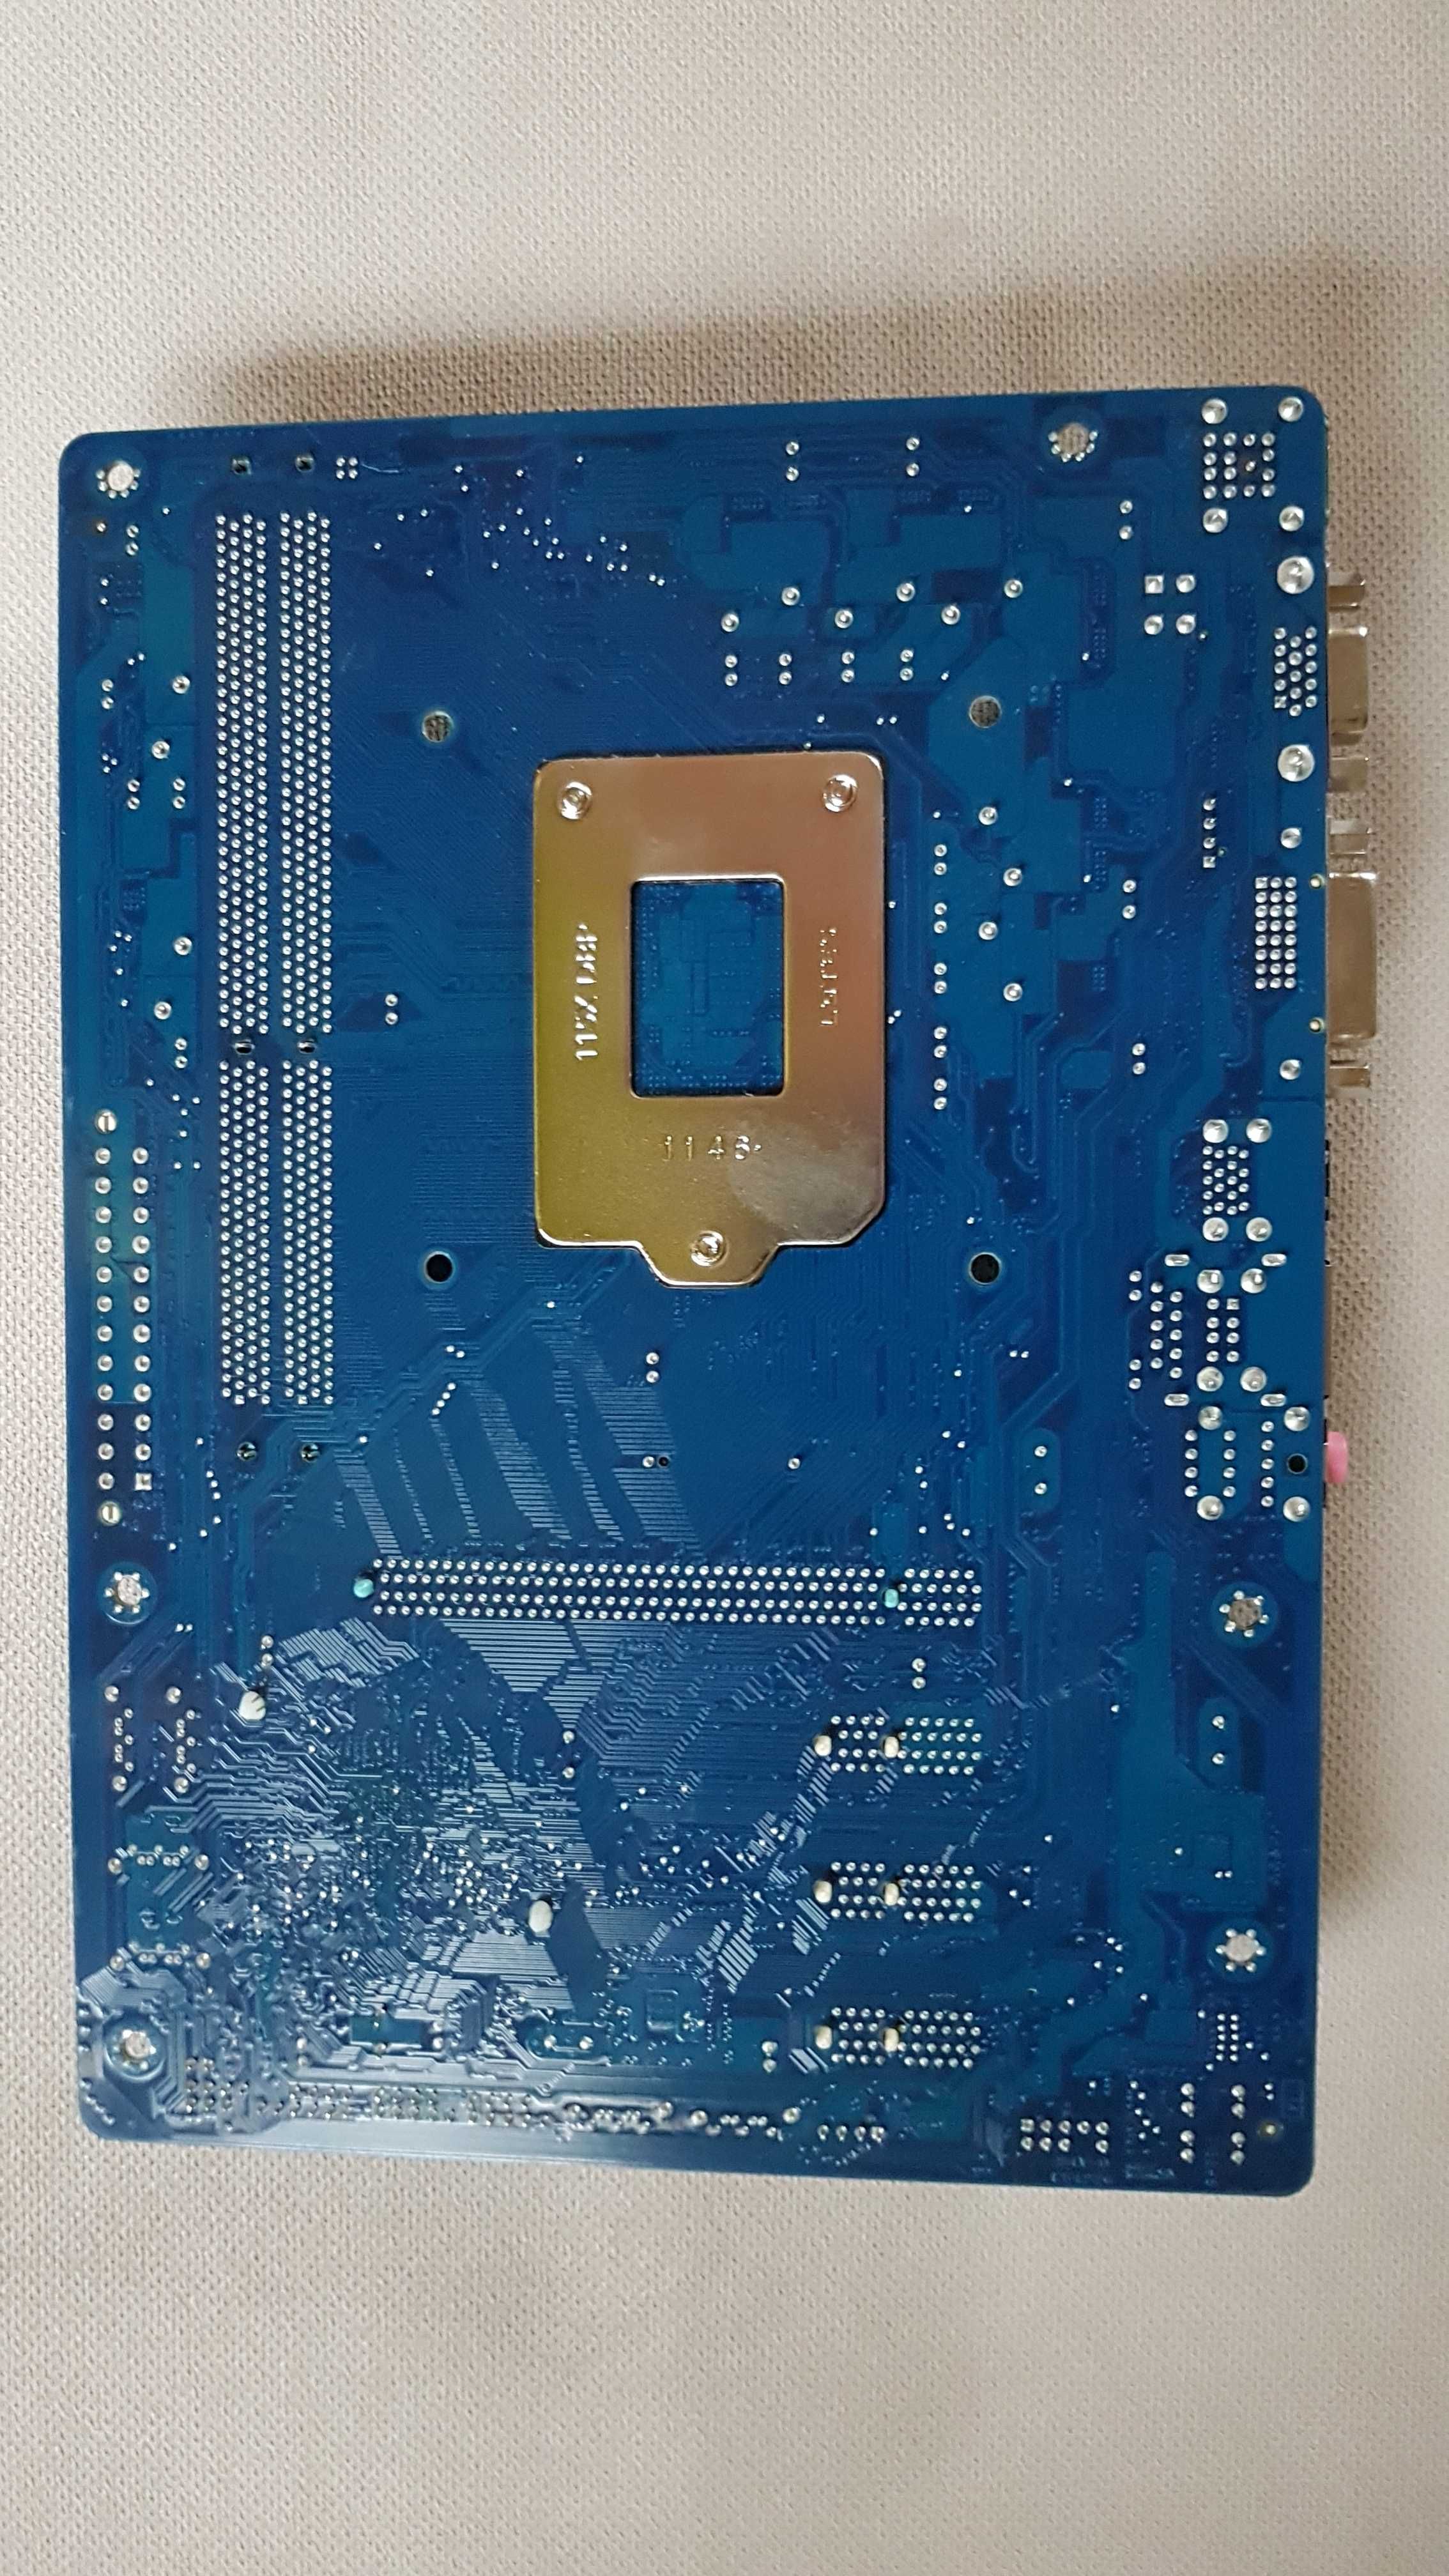 Płyta główna GigaByte GA-H61MA-D3V LGA 1155 micro ATX